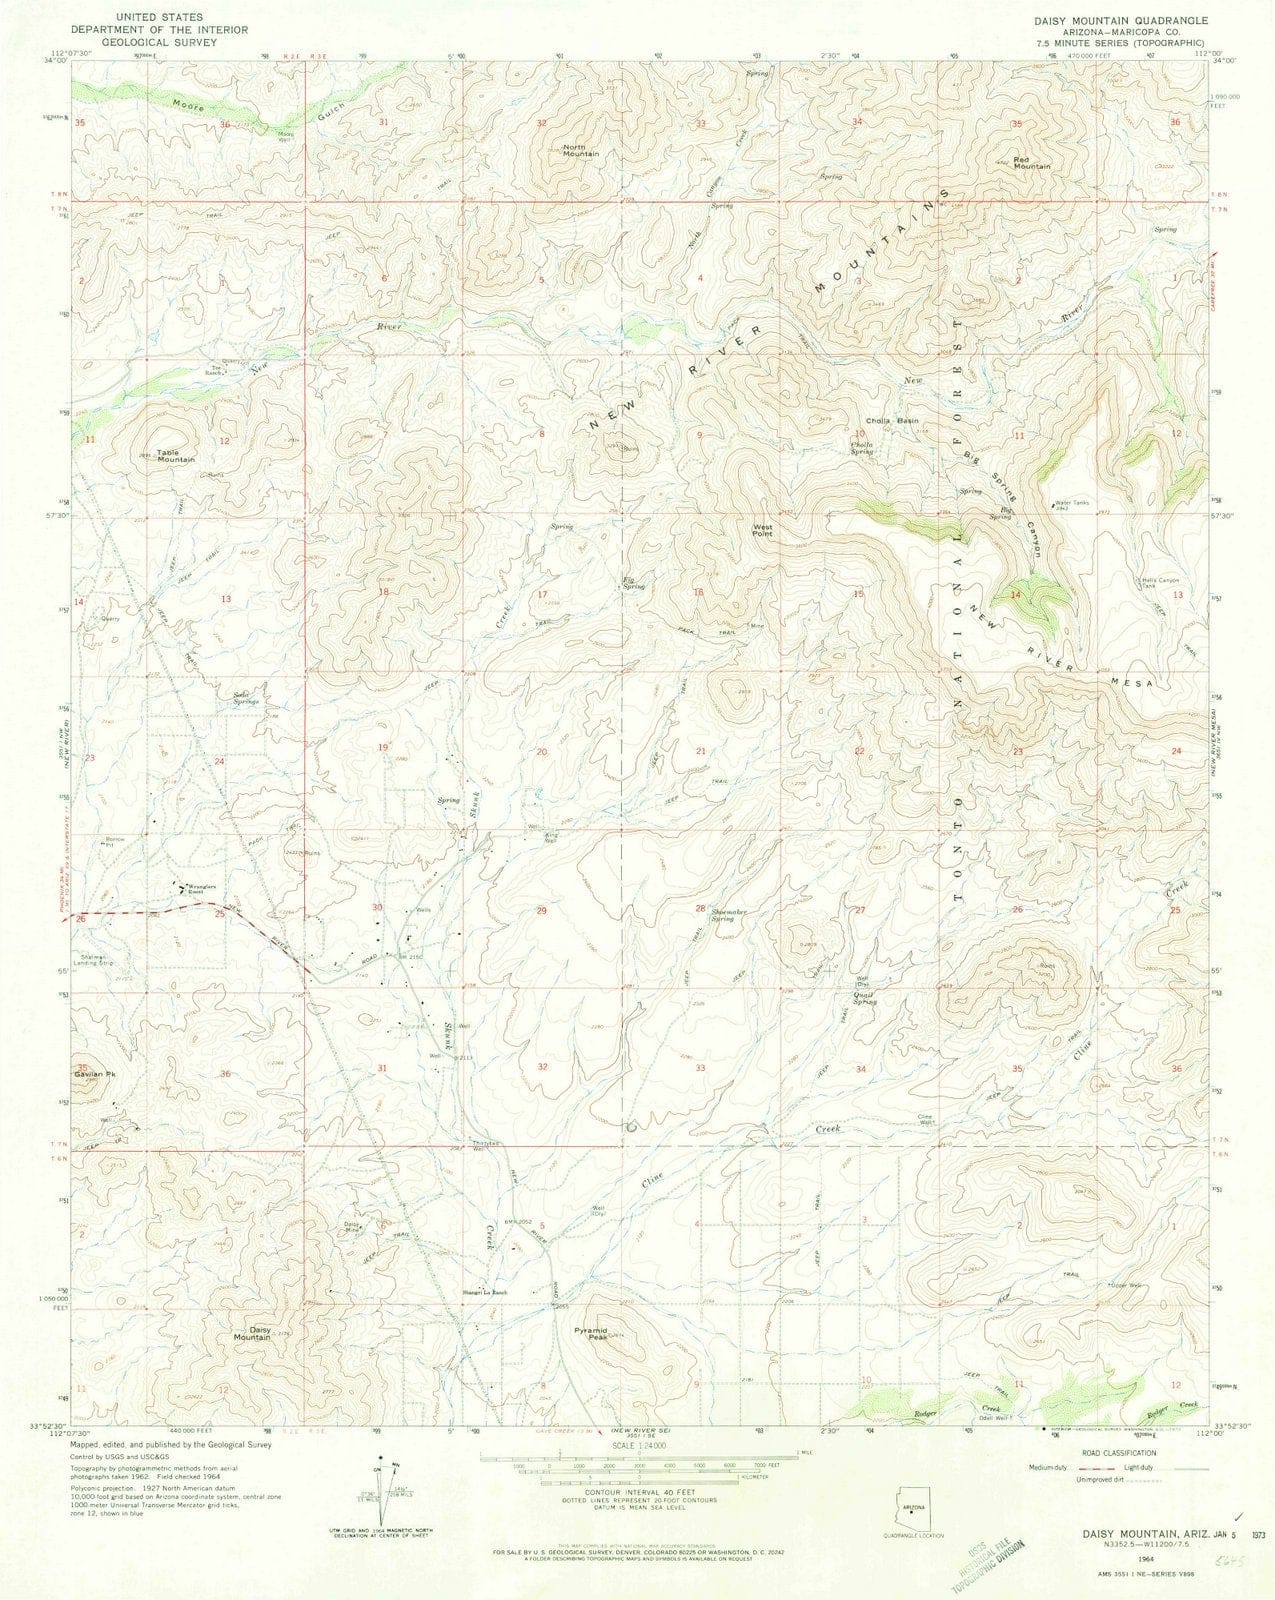 1964 Daisy Mountain, AZ - Arizona - USGS Topographic Map